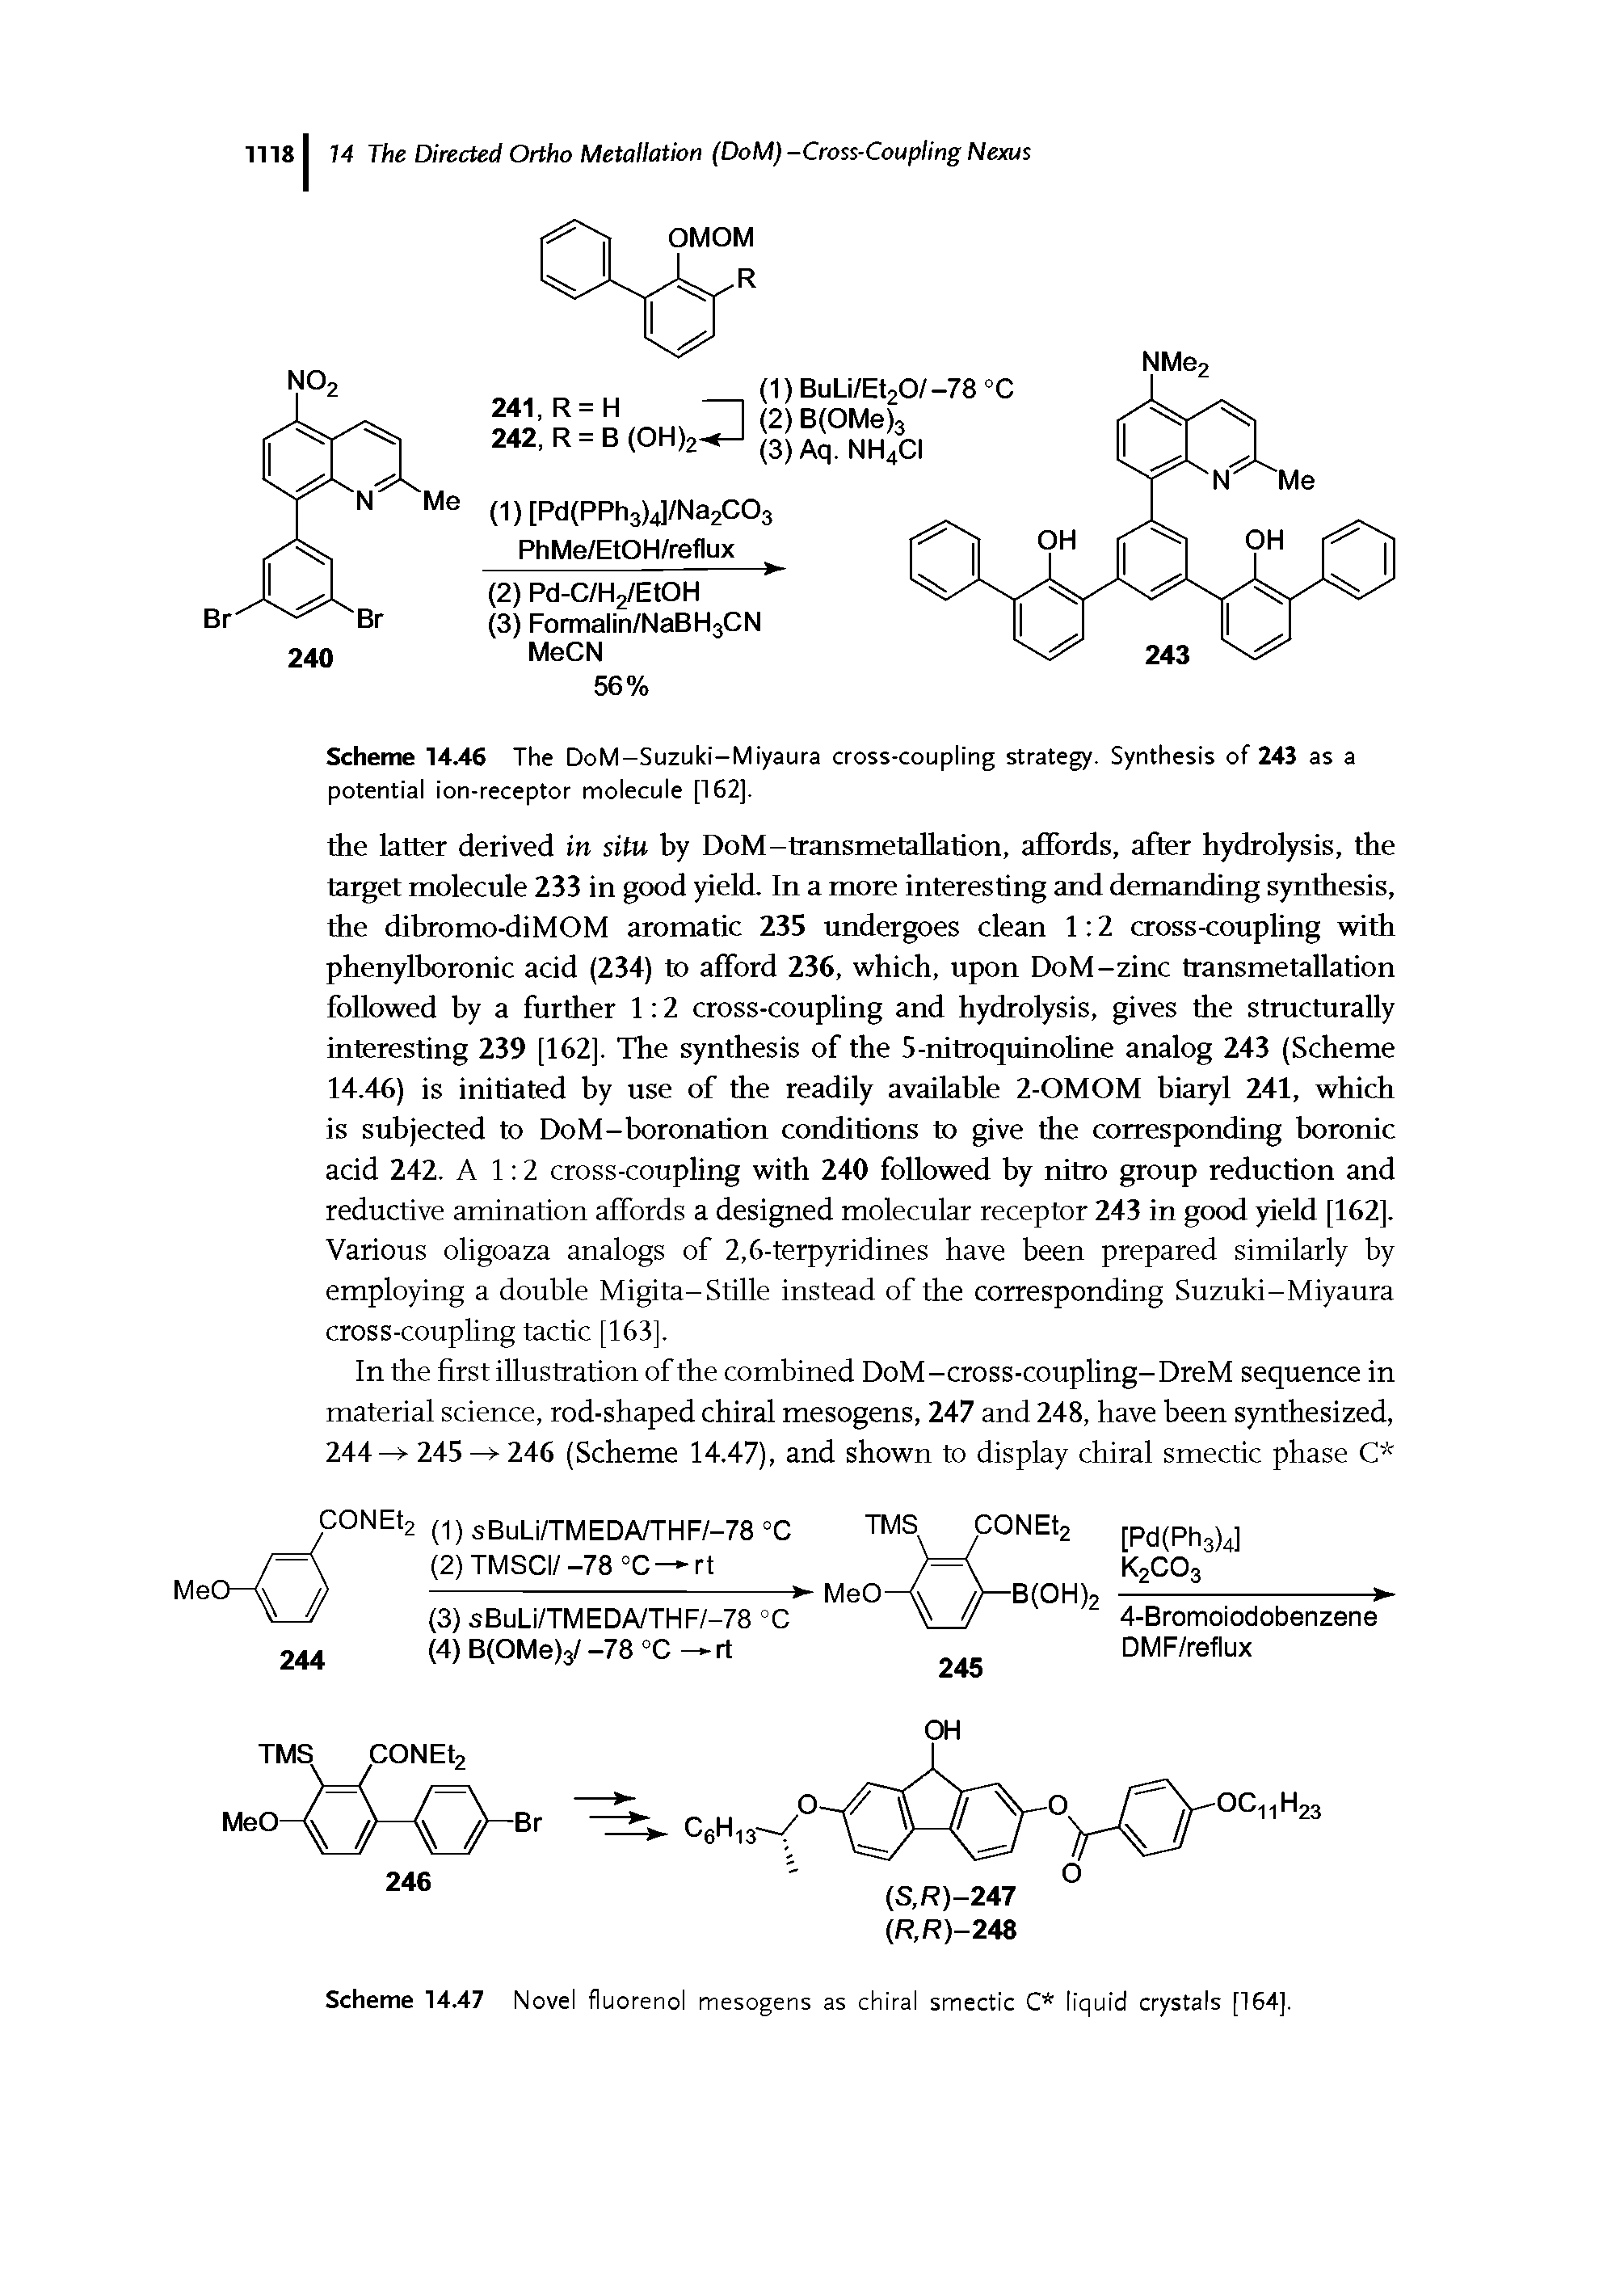 Scheme 14.47 Novel fluorenol mesogens as chiral smectic C liquid crystals [164].